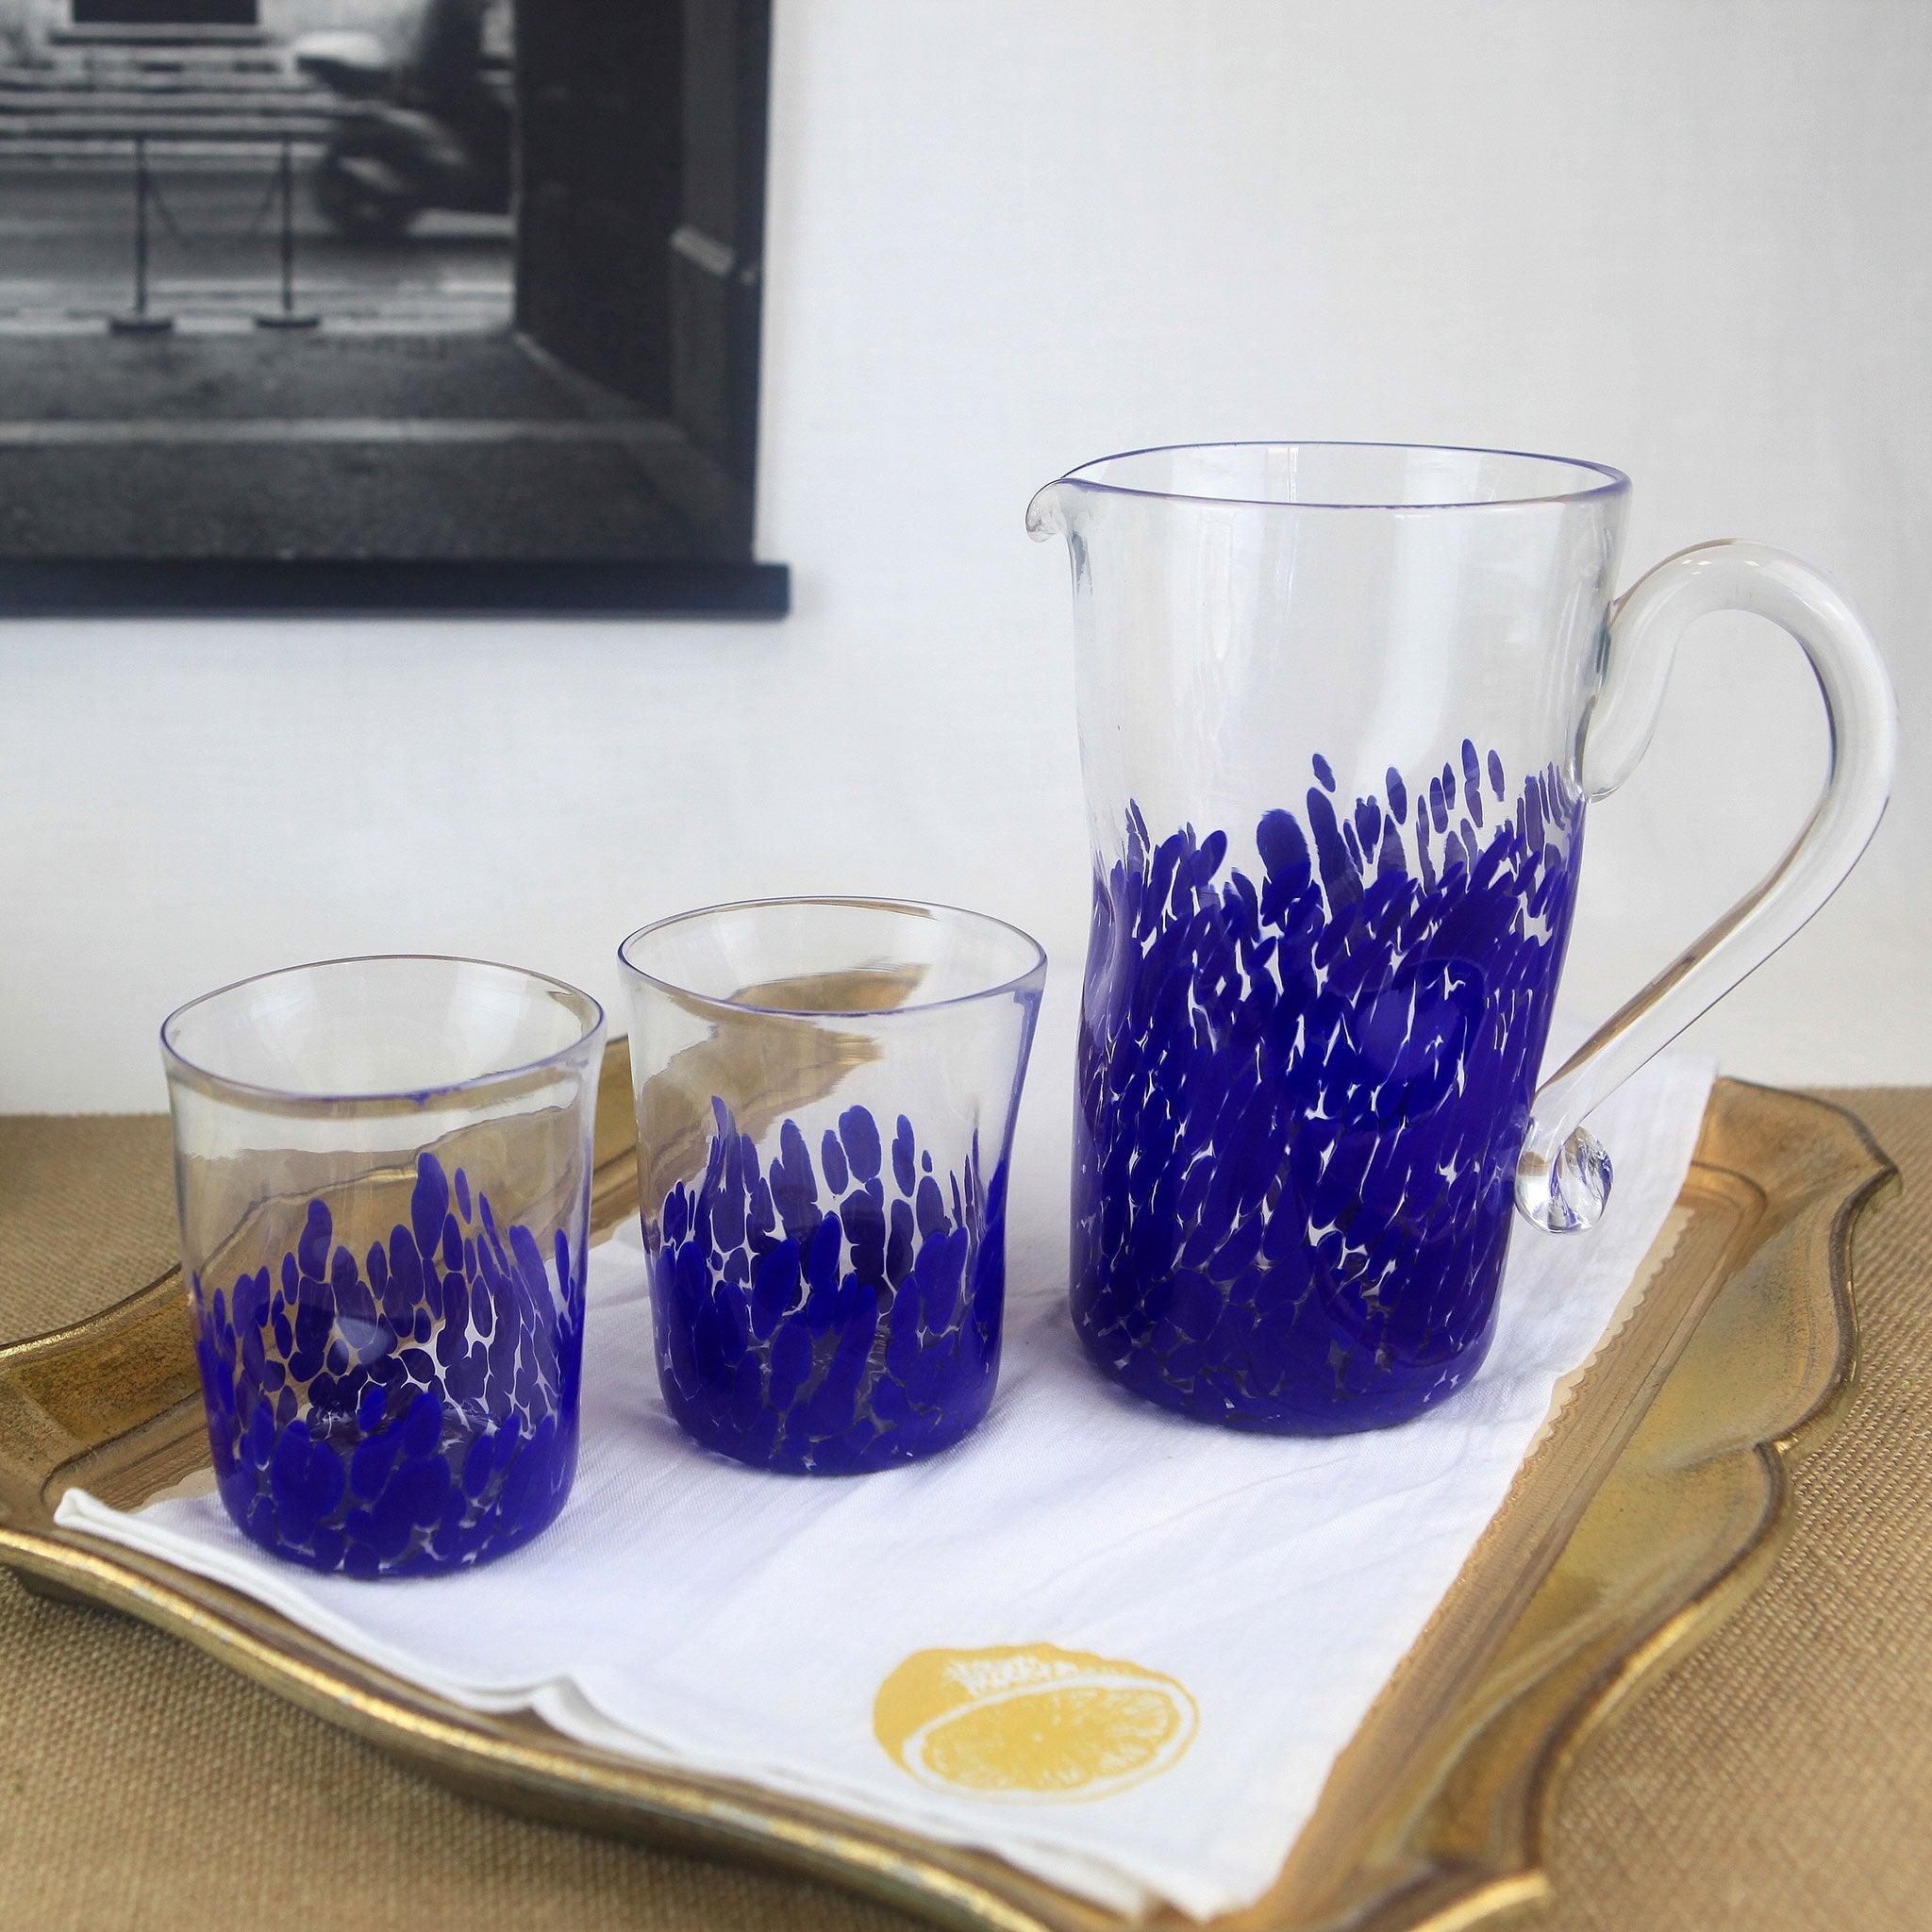 Allegra Murano Glass Pitcher & Glasses Set, Cobalt Blue, Made in